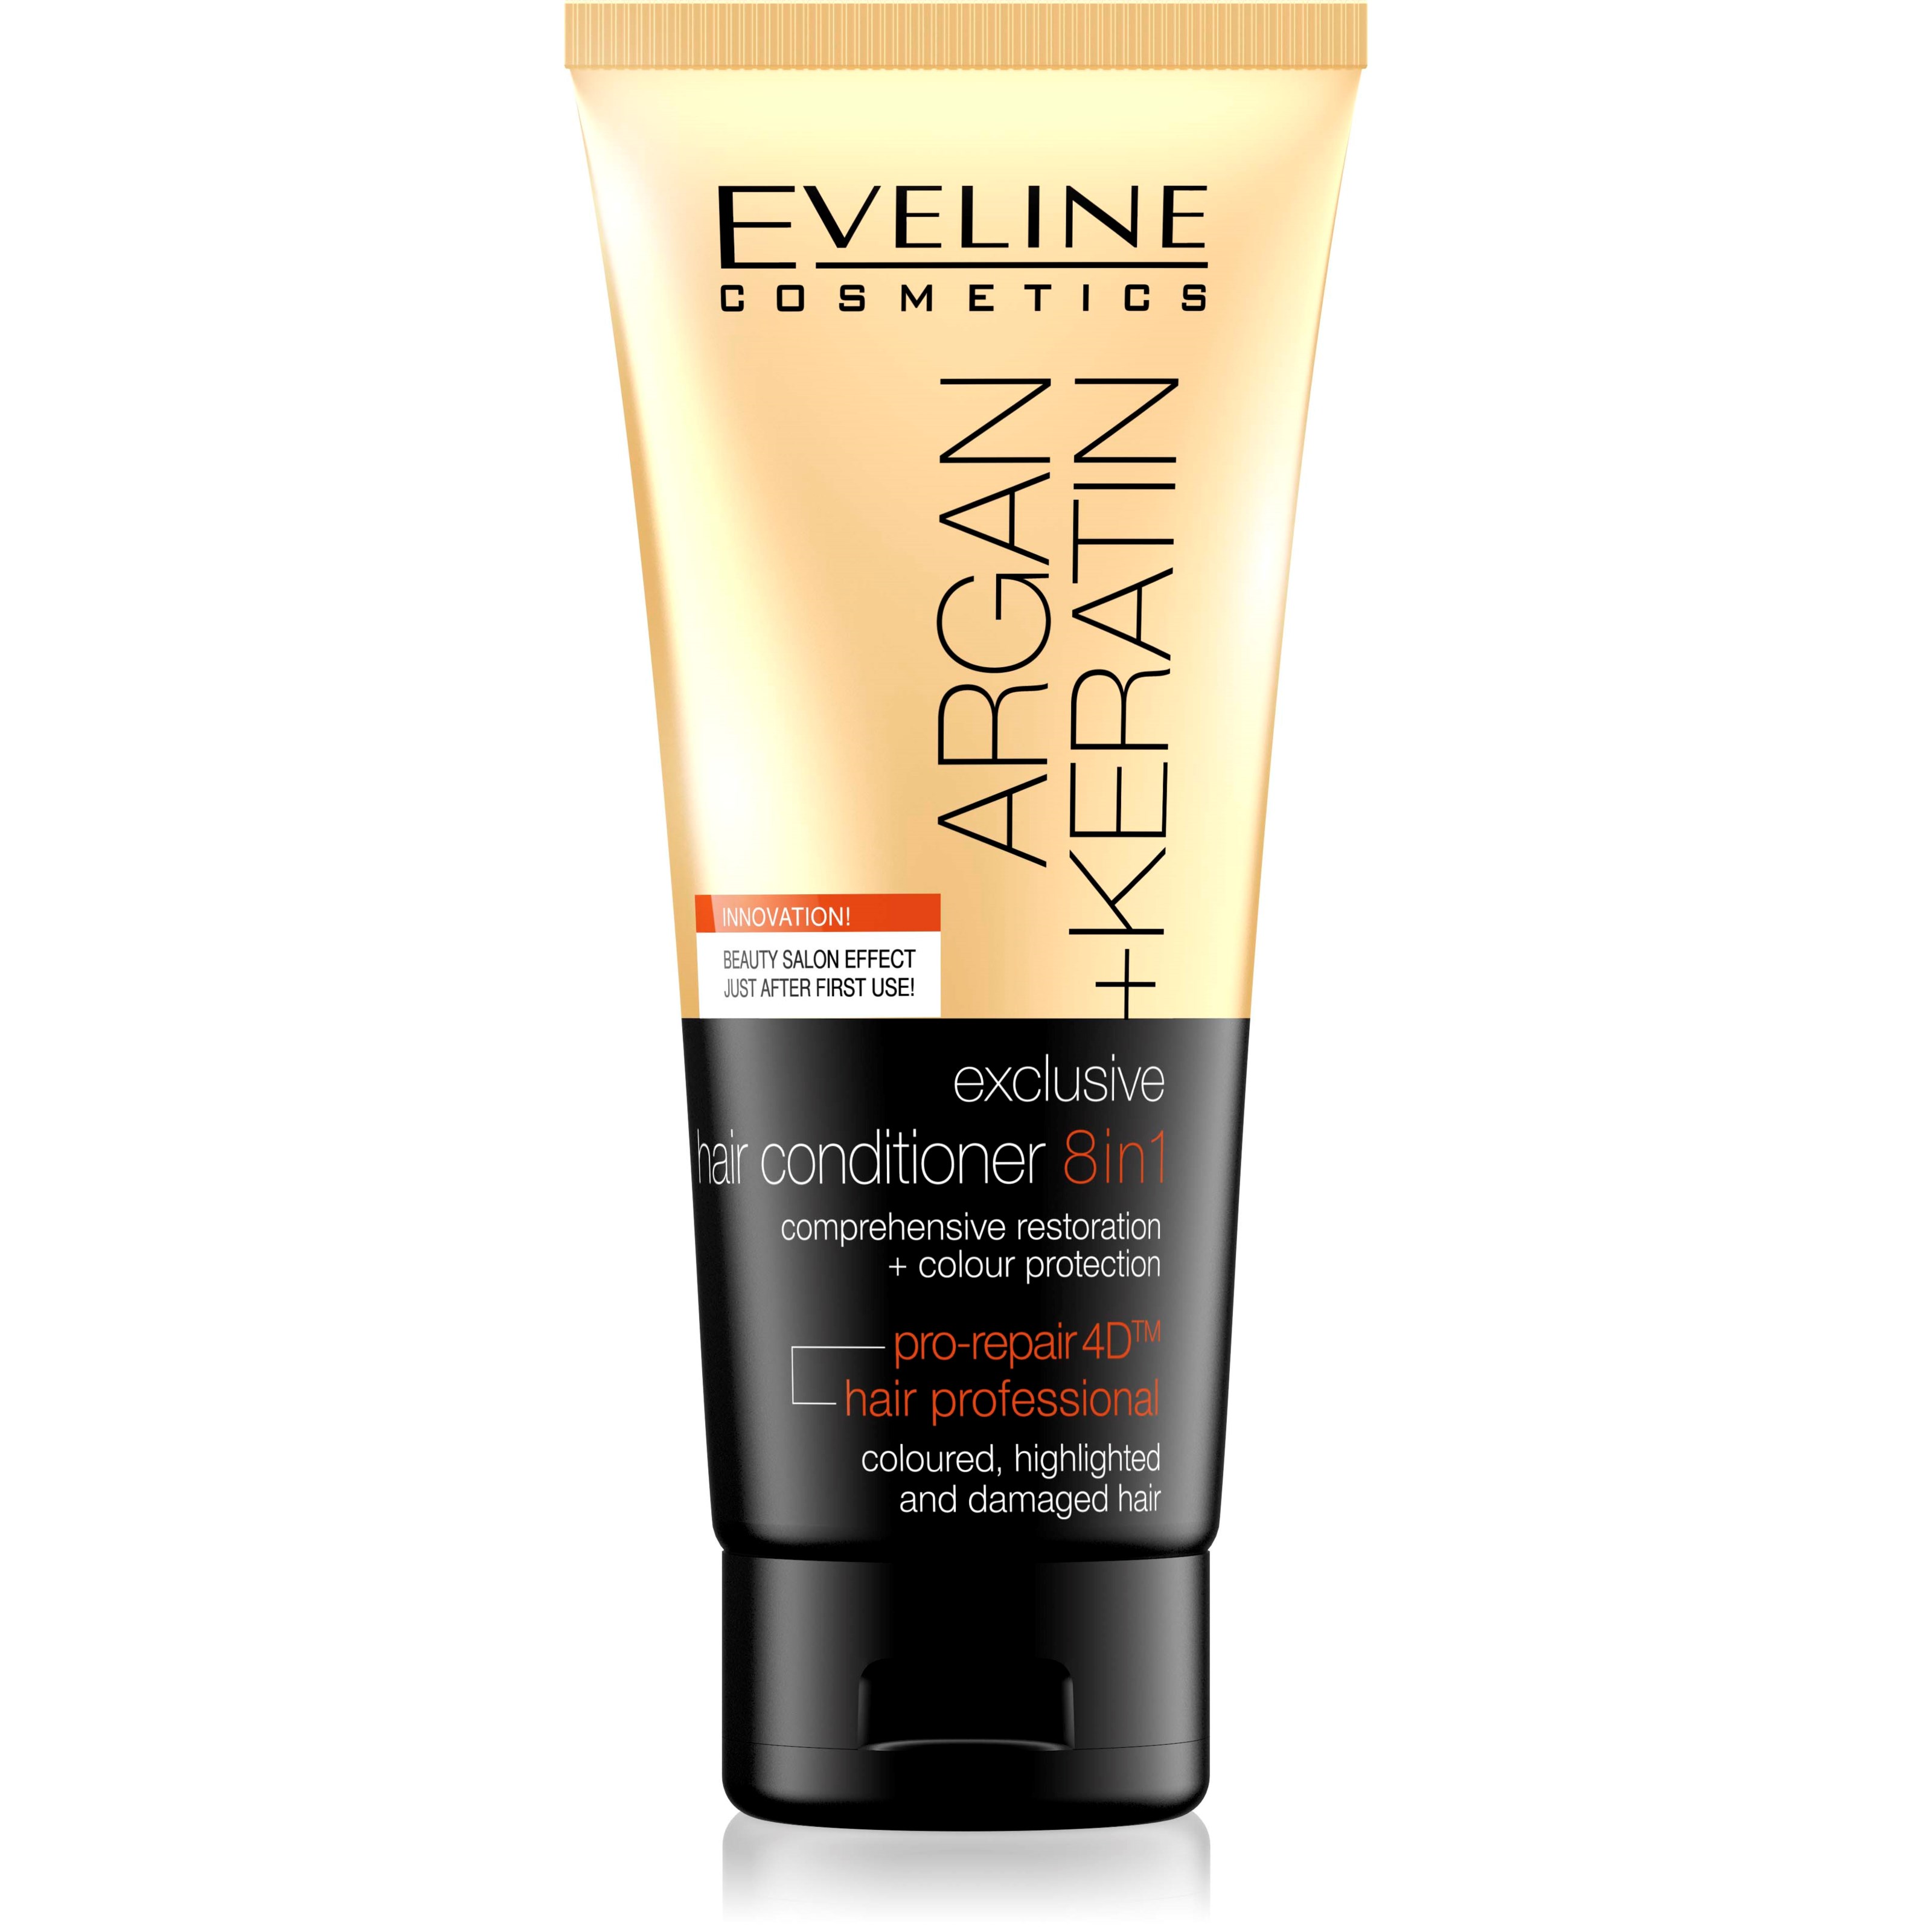 Bilde av Eveline Cosmetics Argan + Keratin Exclusive Hair Conditioner 8in1 200